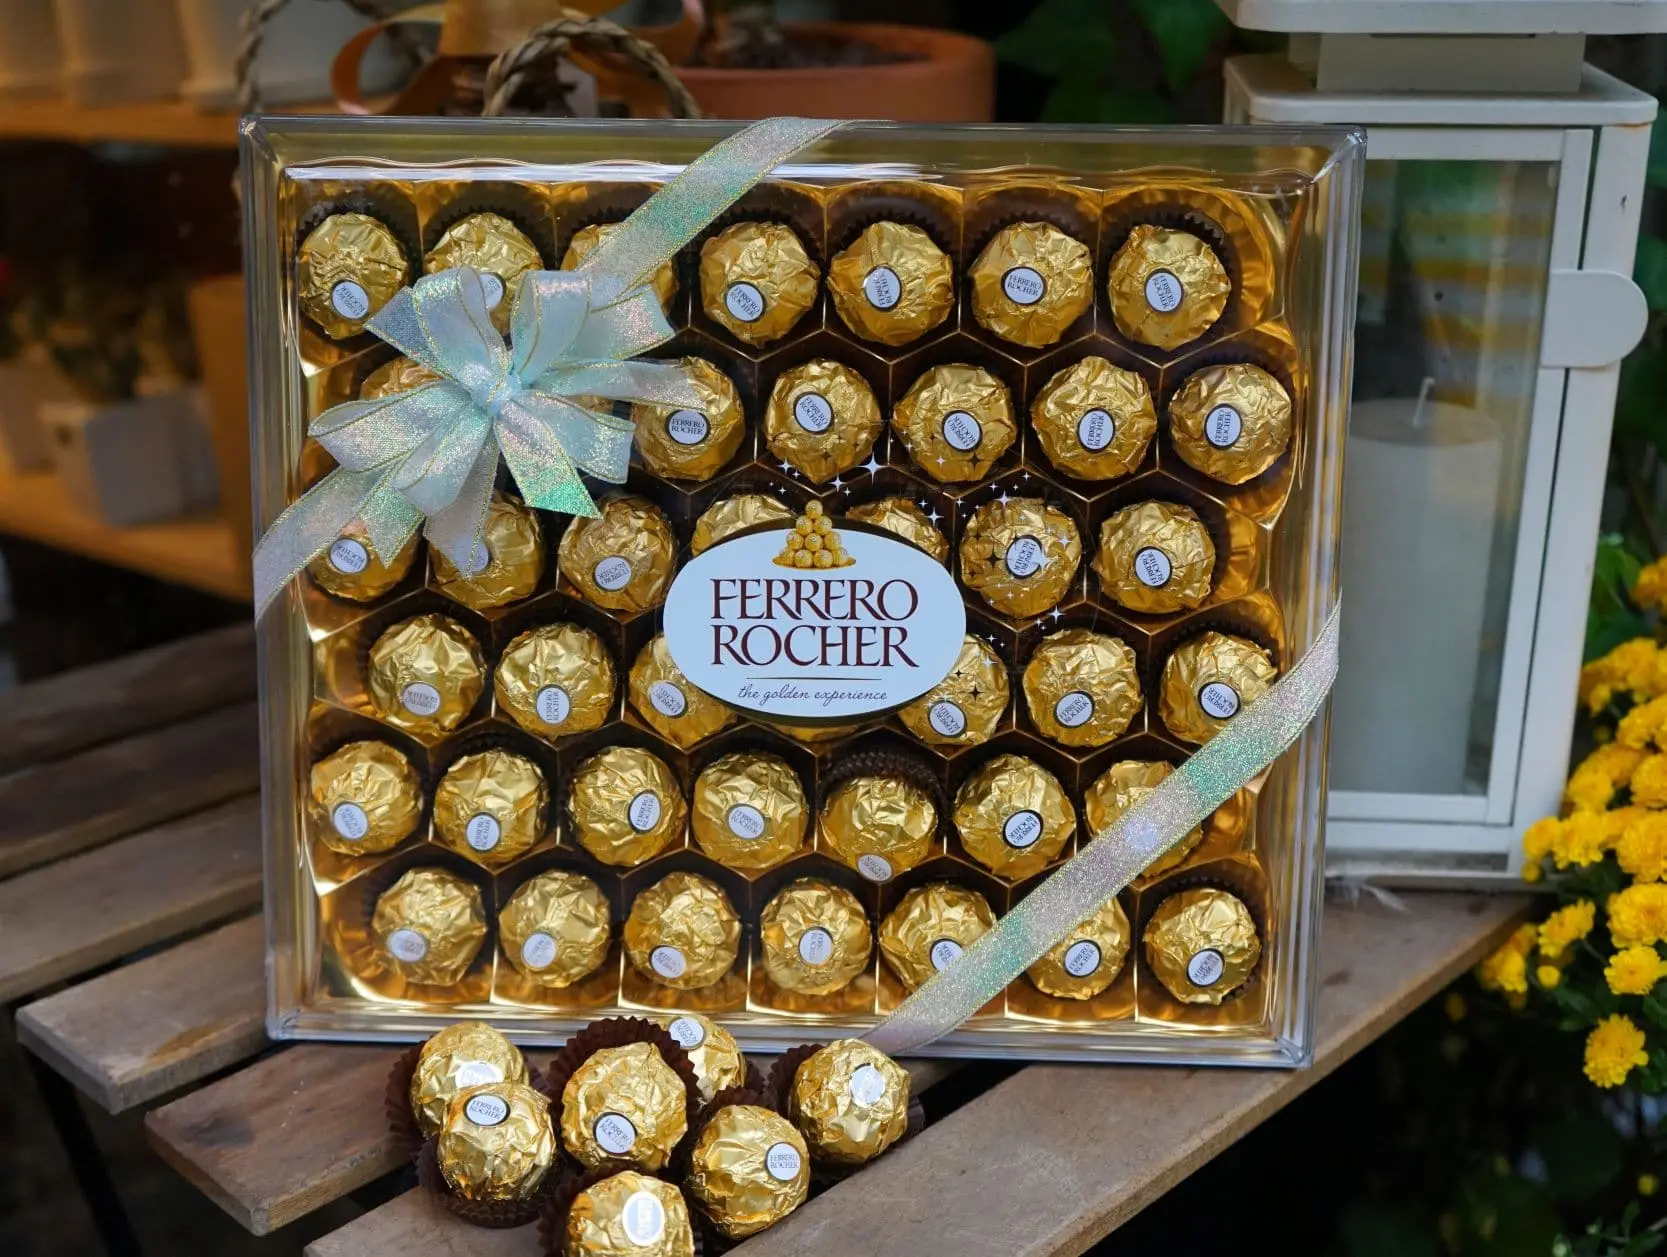 Ferrero chocolate